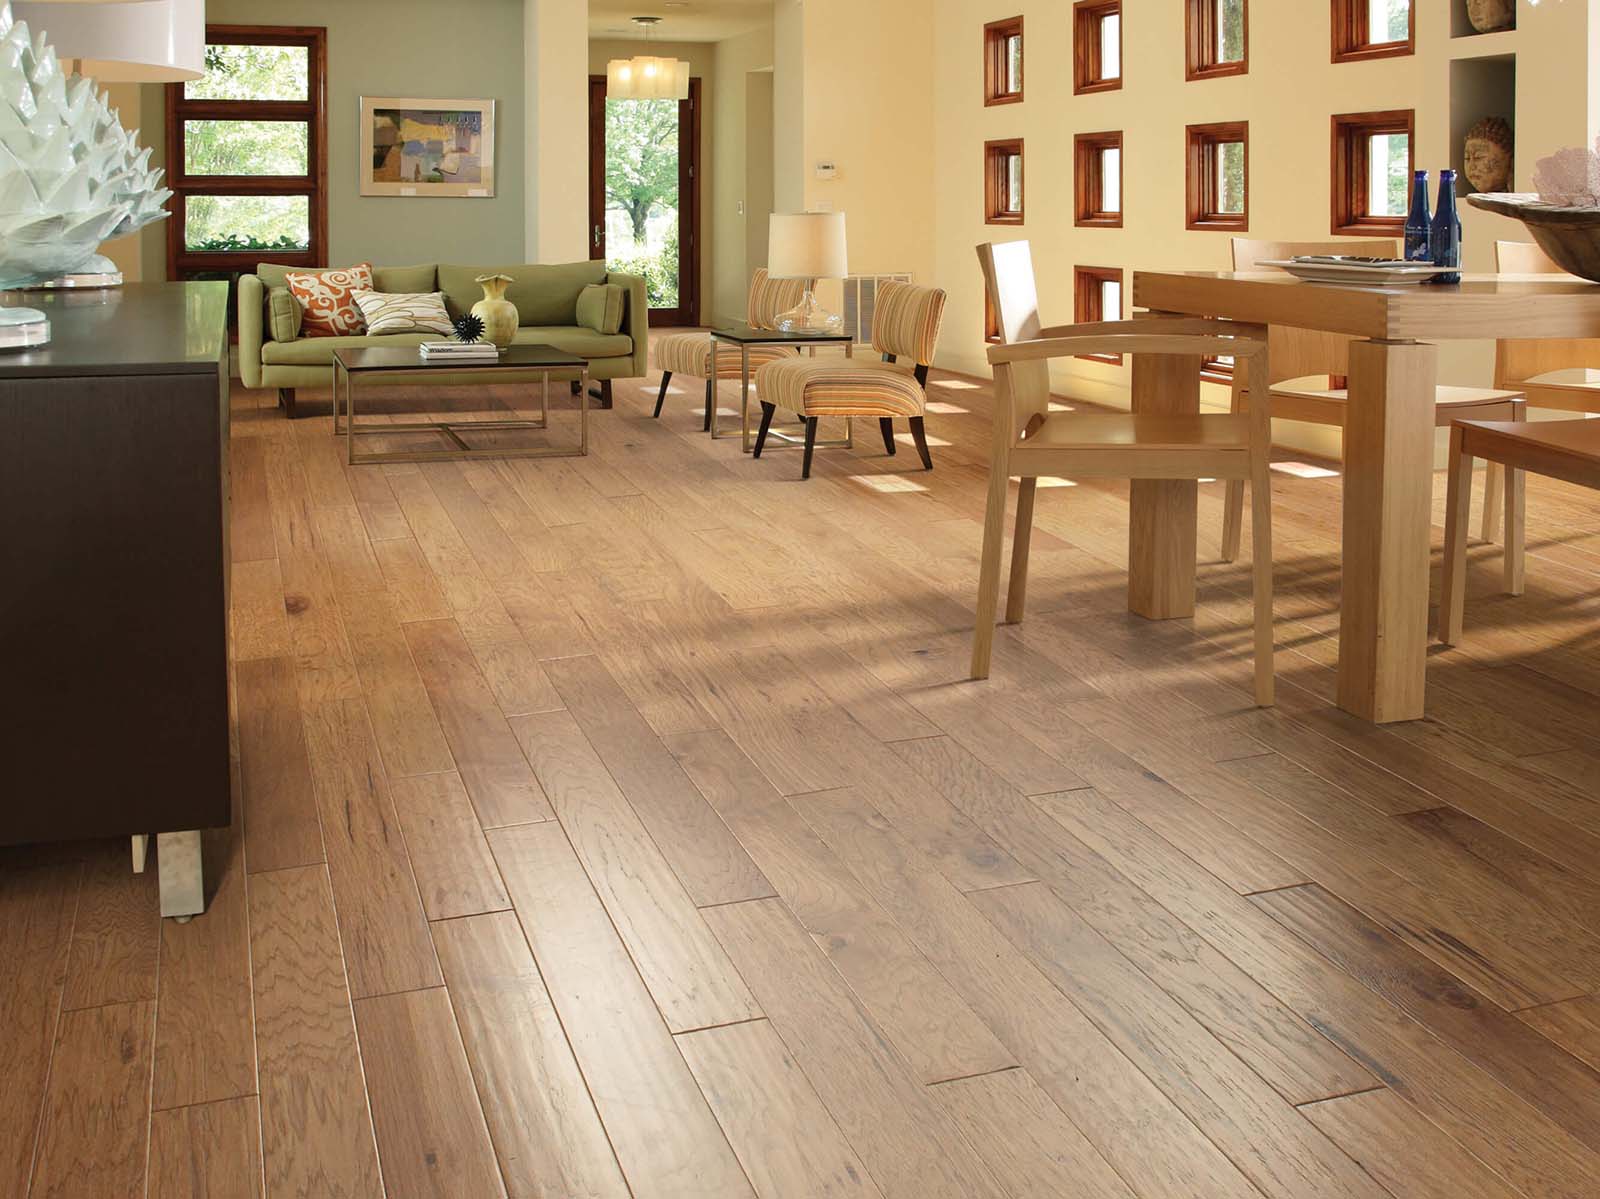 Hardwood flooring in living room | The L&L Company